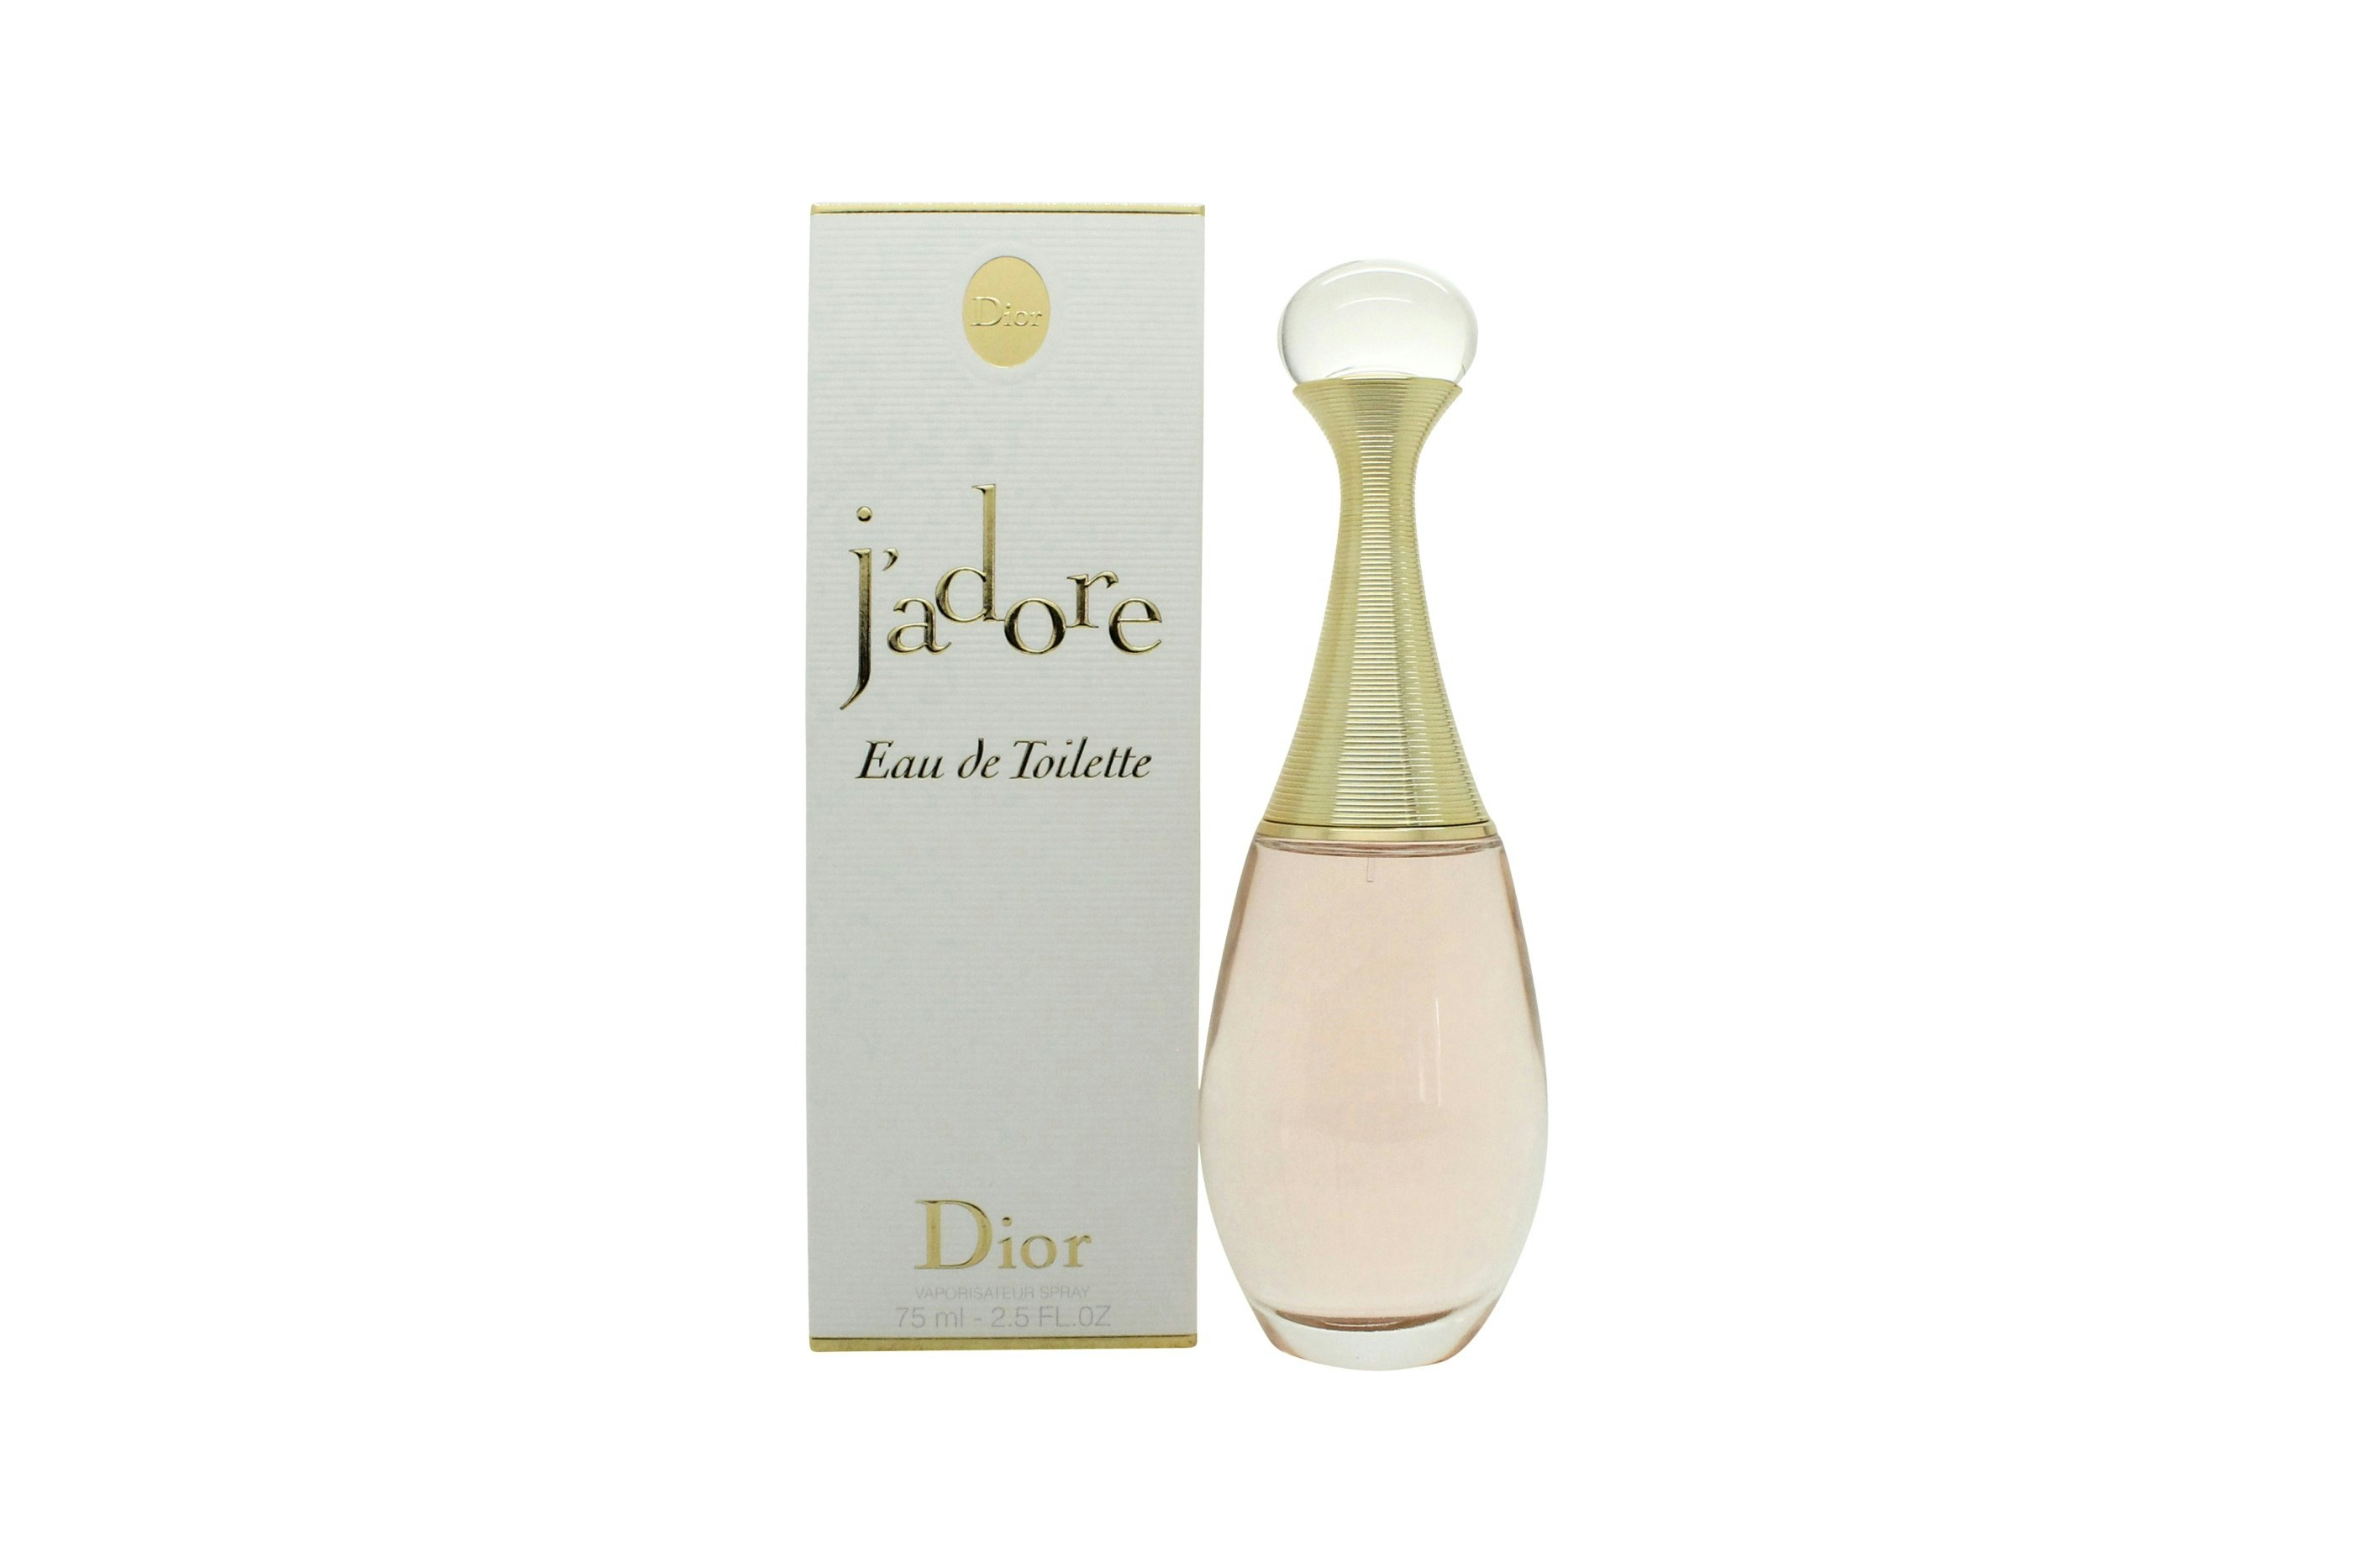 J'adore, Christian Dior EdT - Prova parfymen först! Tusentals ...